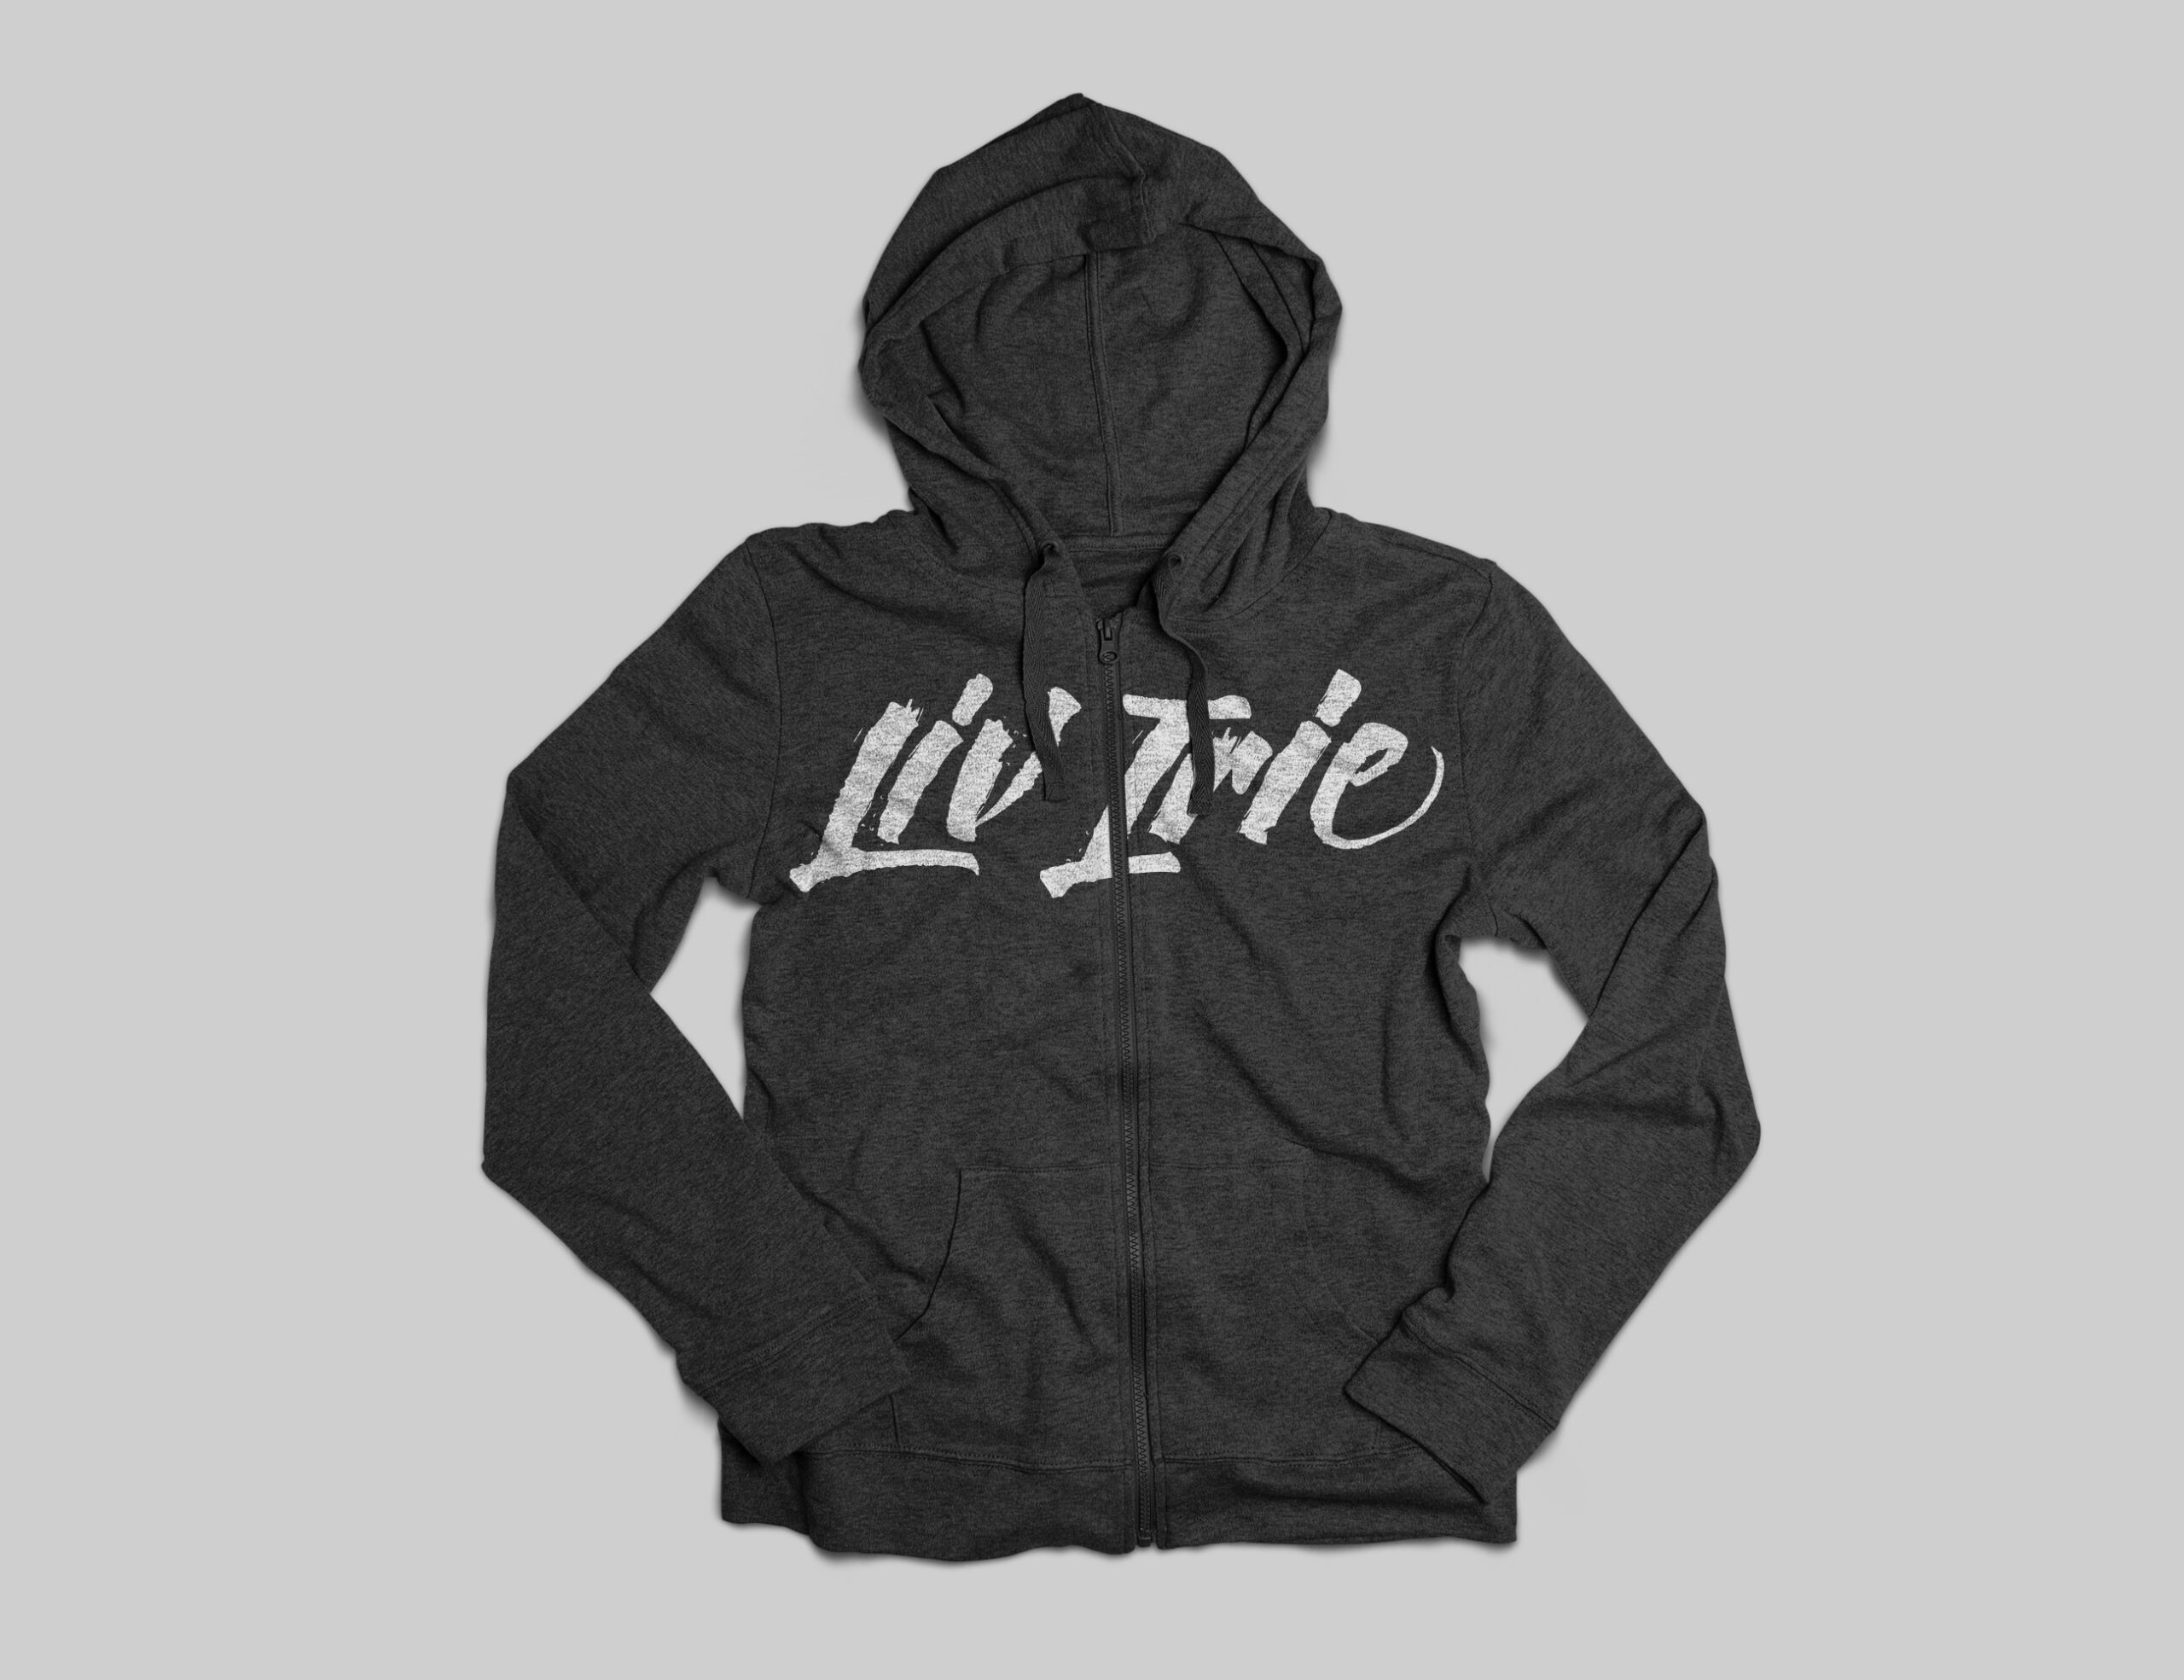 Liv Irie clothing company logo and hoodie mockup